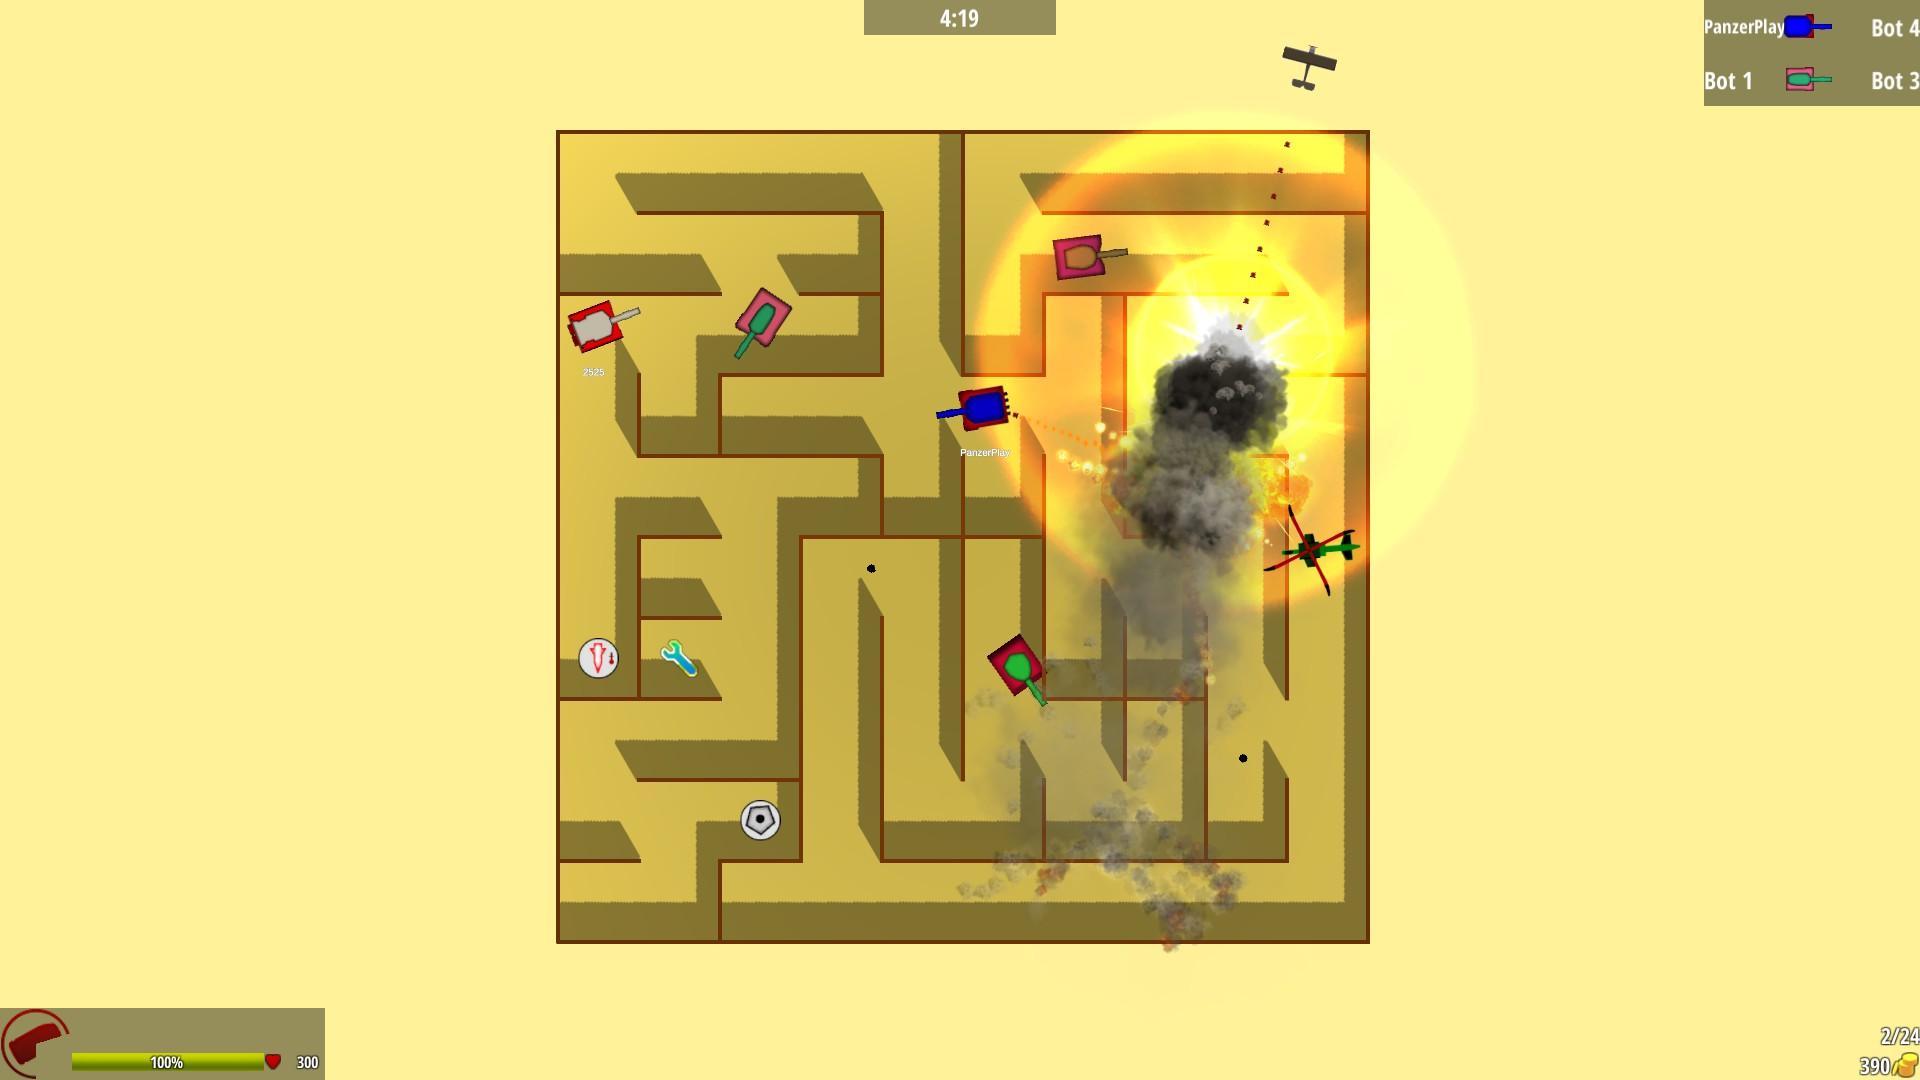 Screenshot №3 from game Panzer Warfare